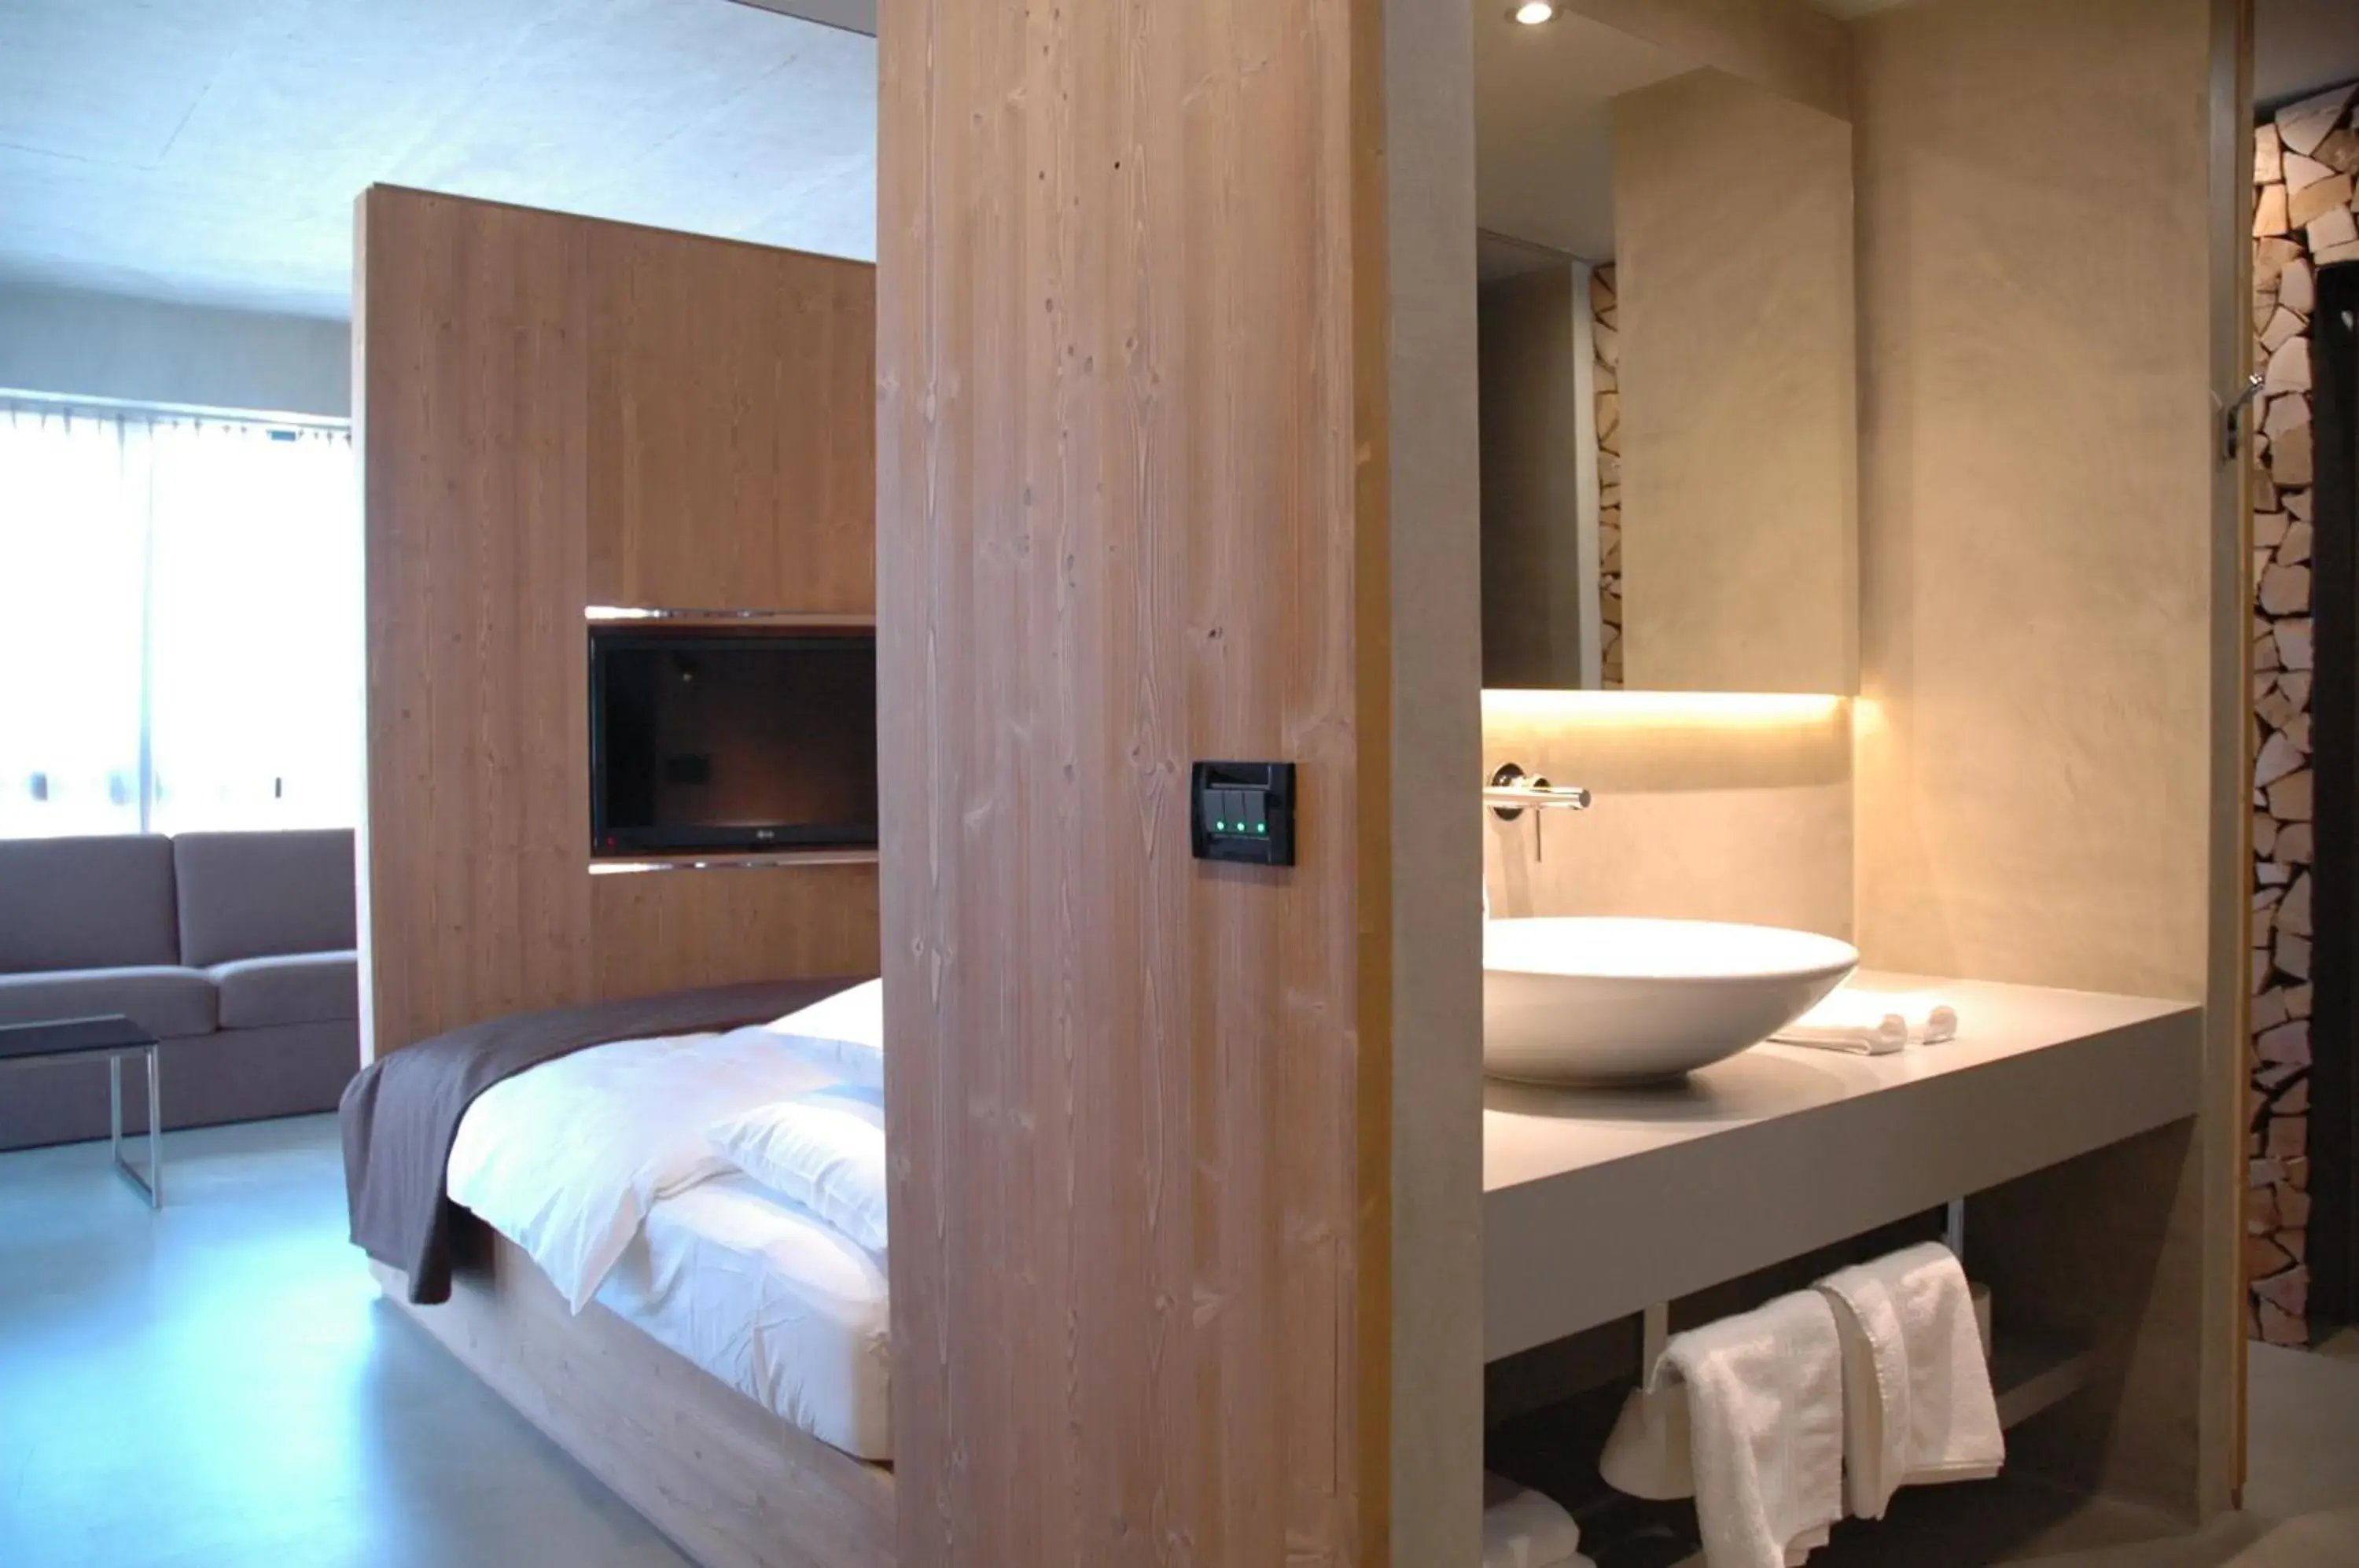 Photo of the whole room, Bathroom in Hotel Nox